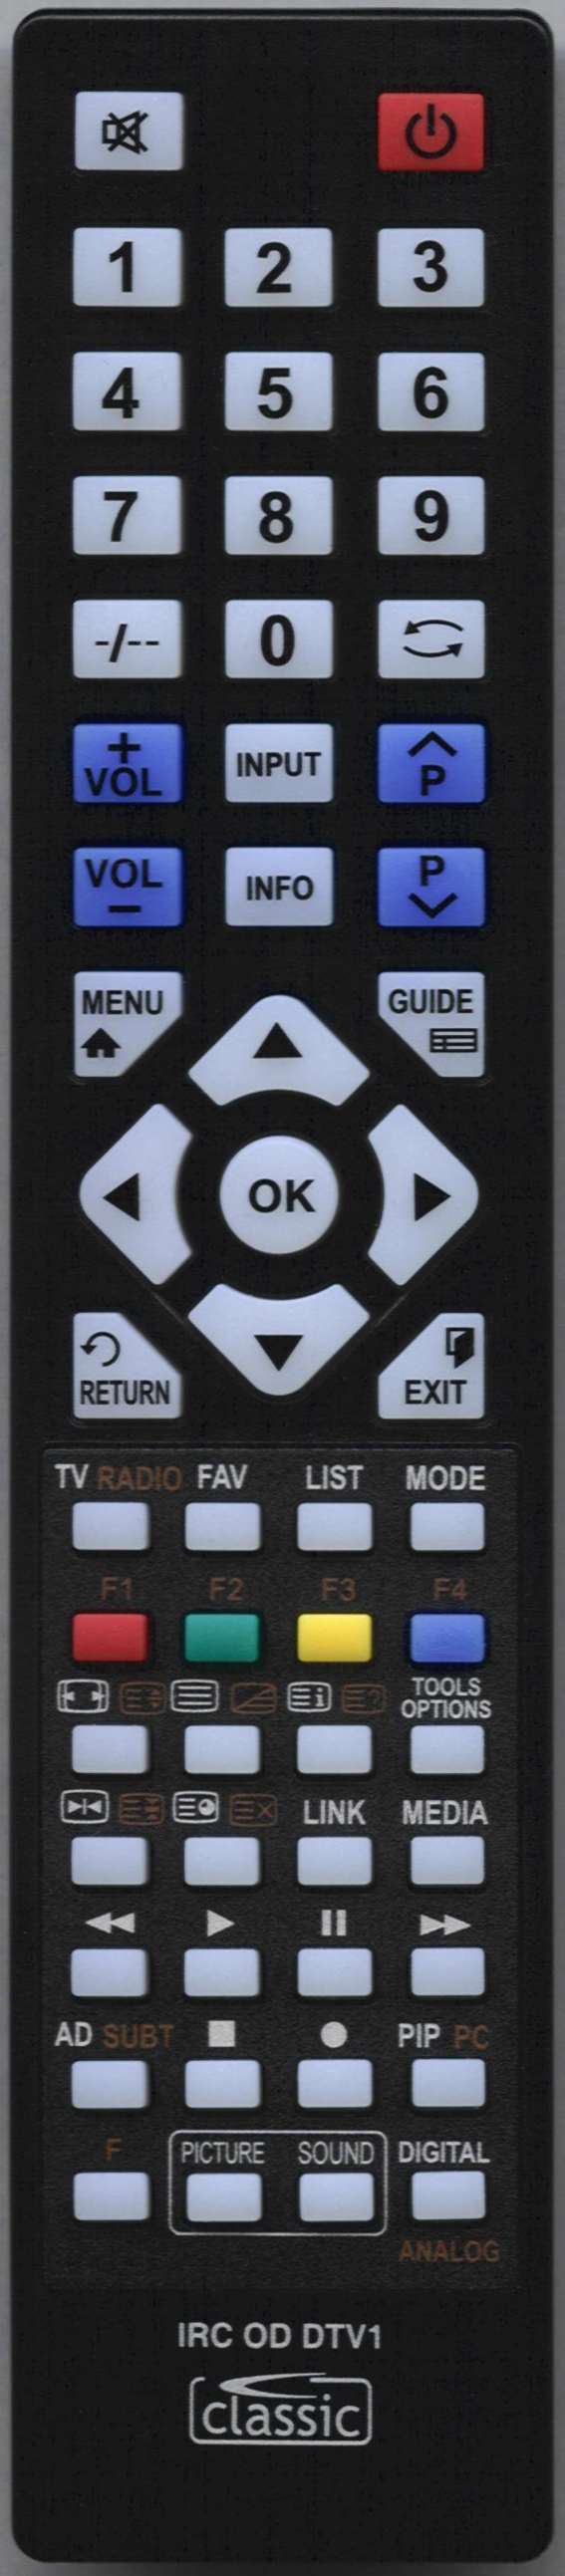 Panasonic N2QAYB001010 Remote Control Alternative